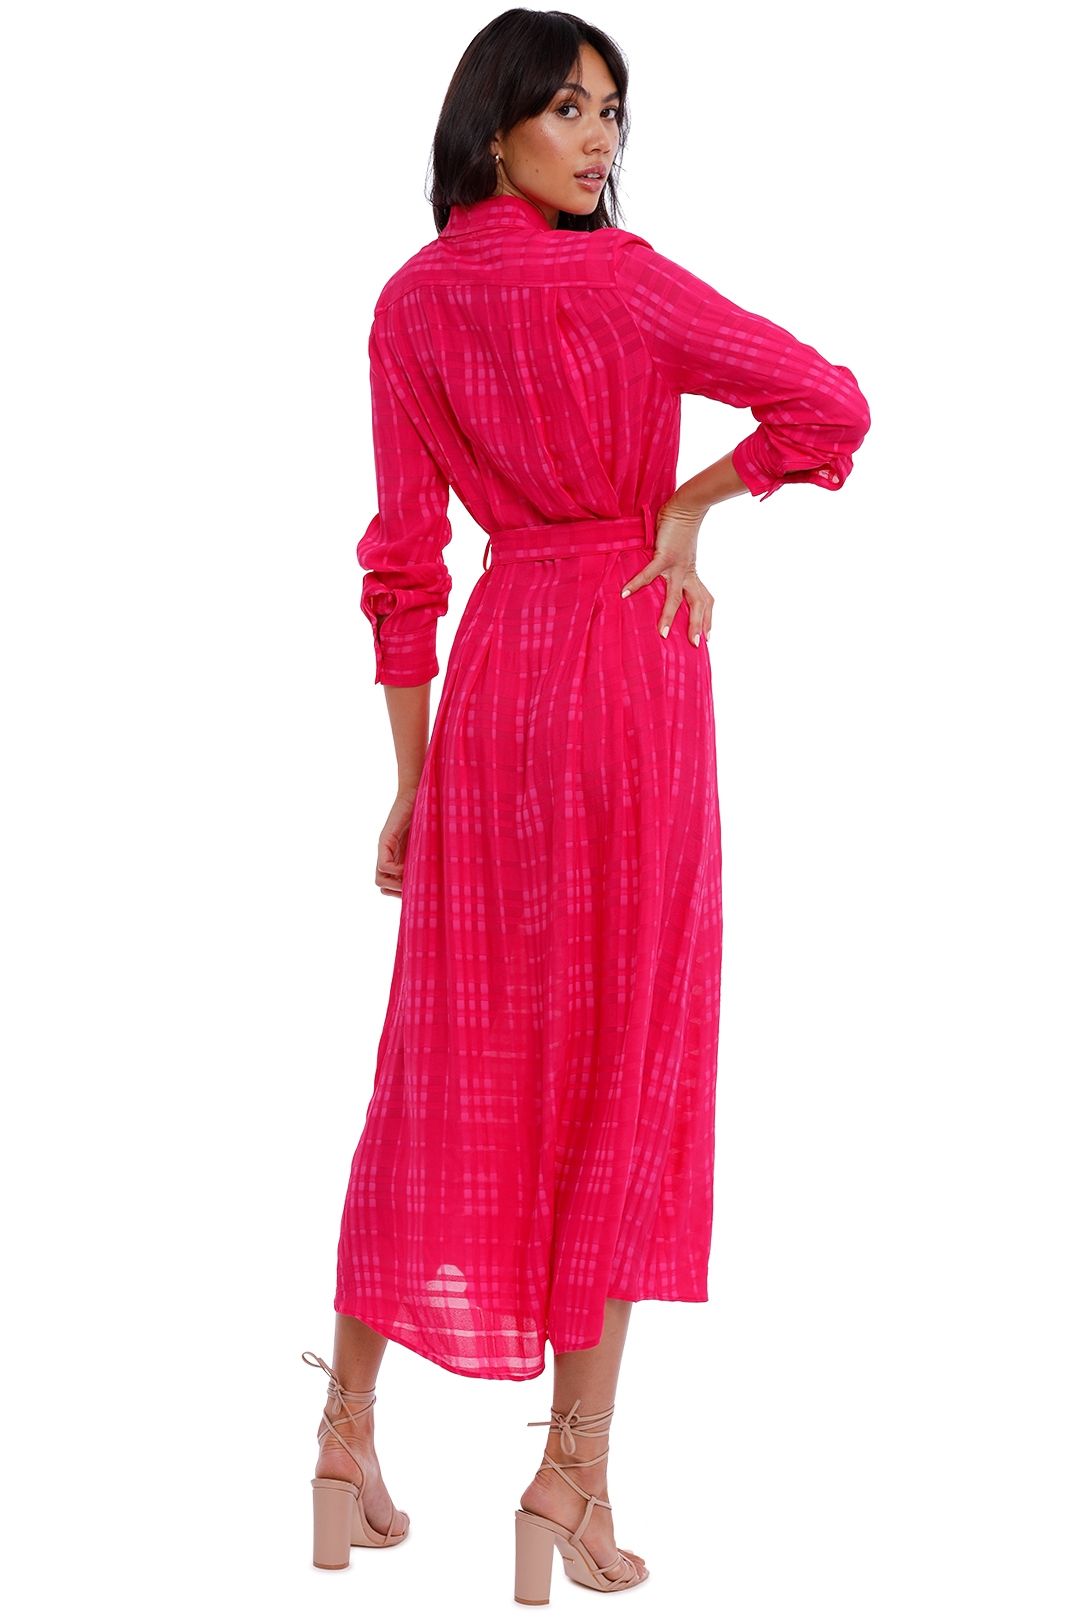 Kate Sylvester Stella Shirt Dress in Pink Check